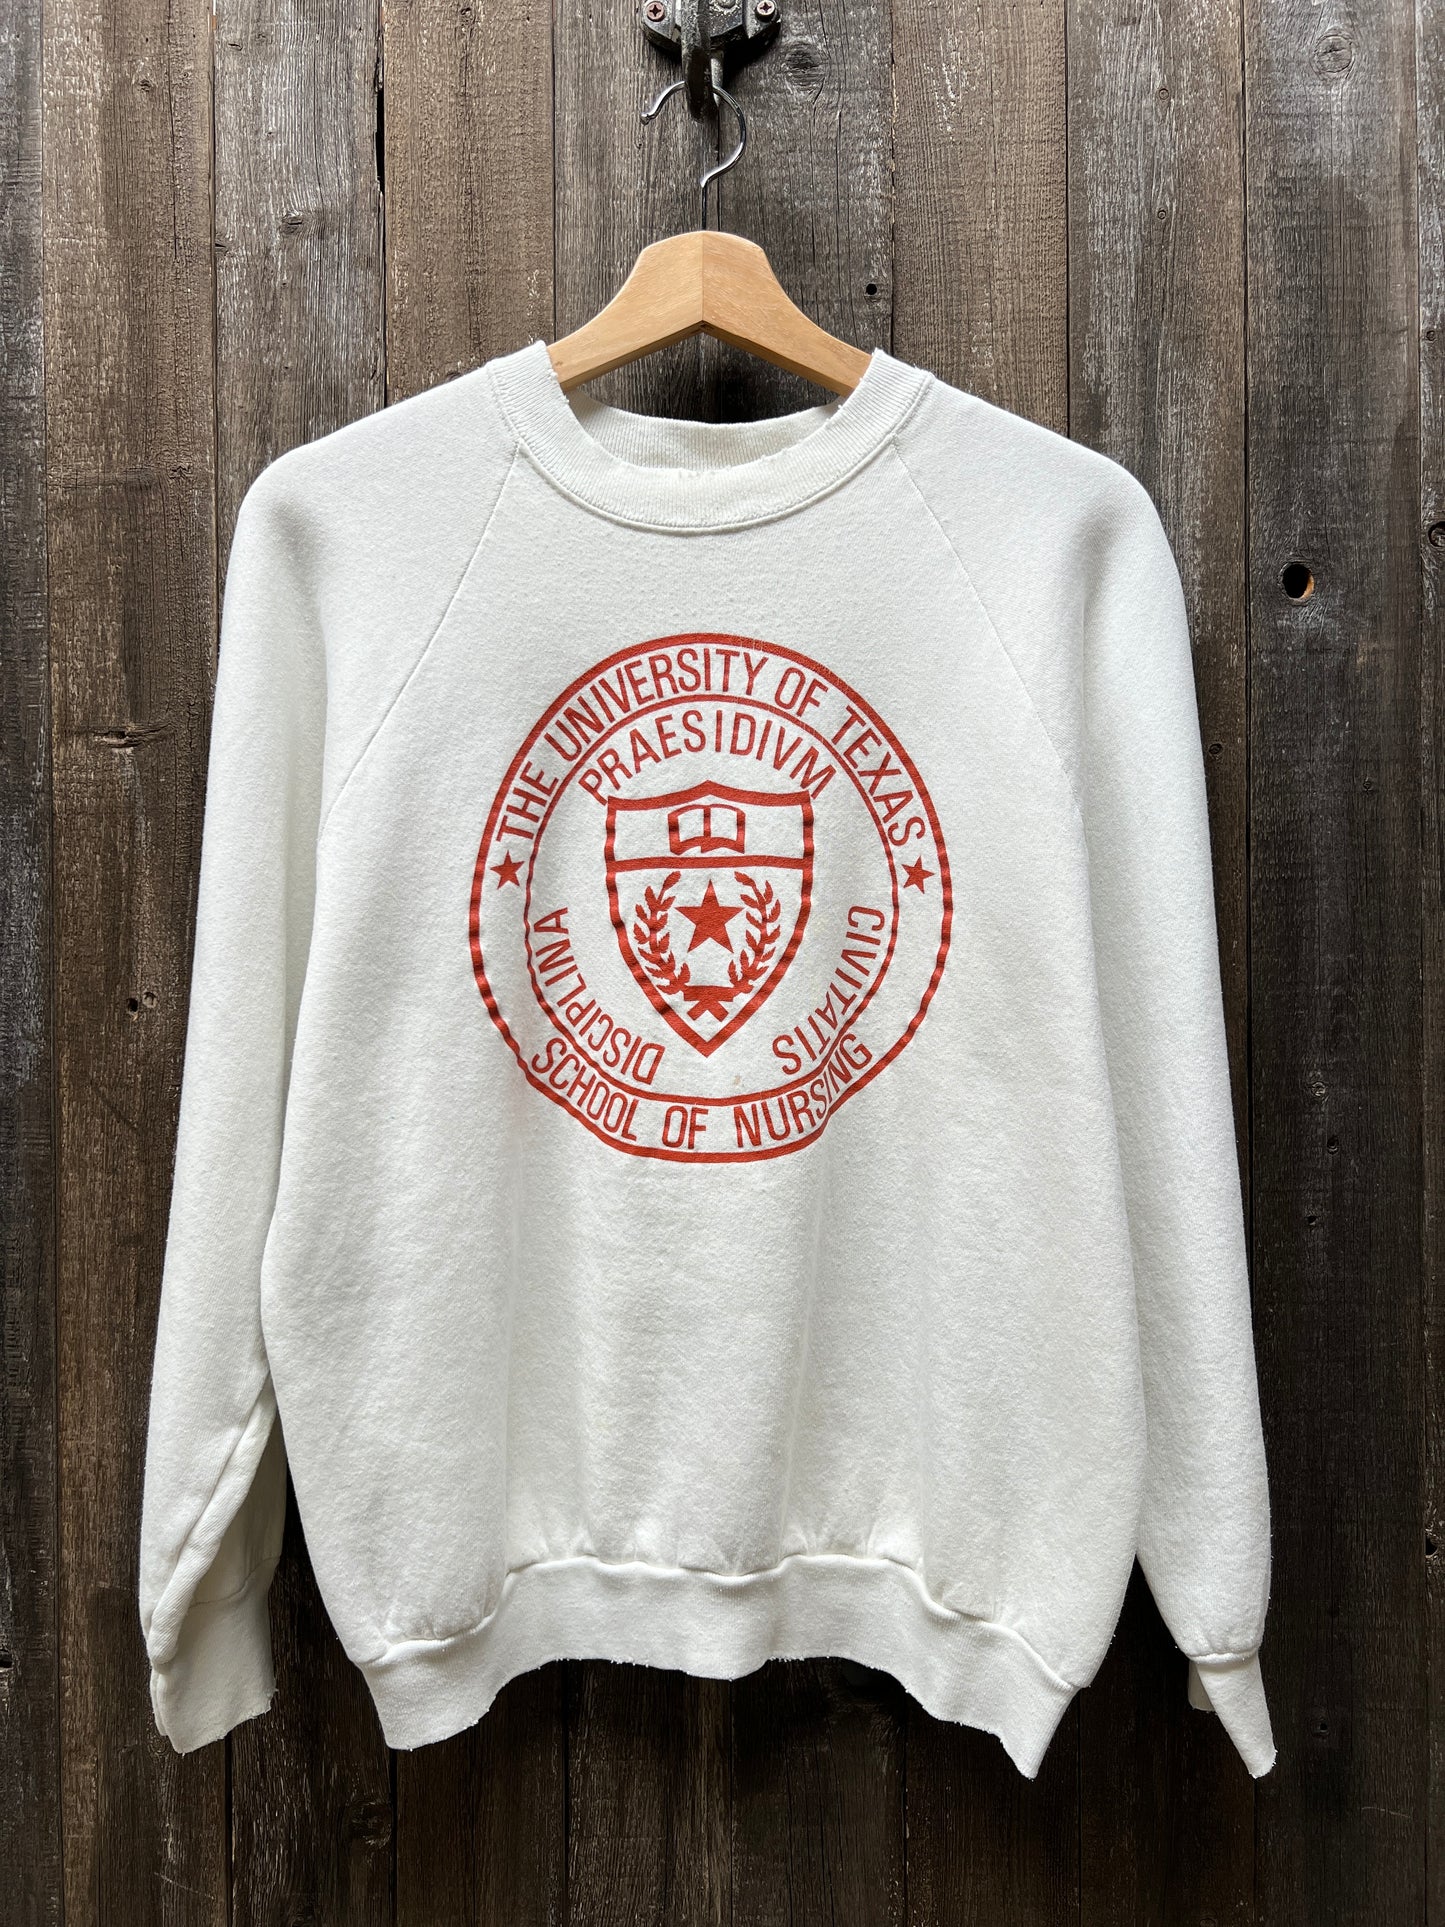 University of Texas Sweatshirt - S/M-Customize Your Embroidery Wording